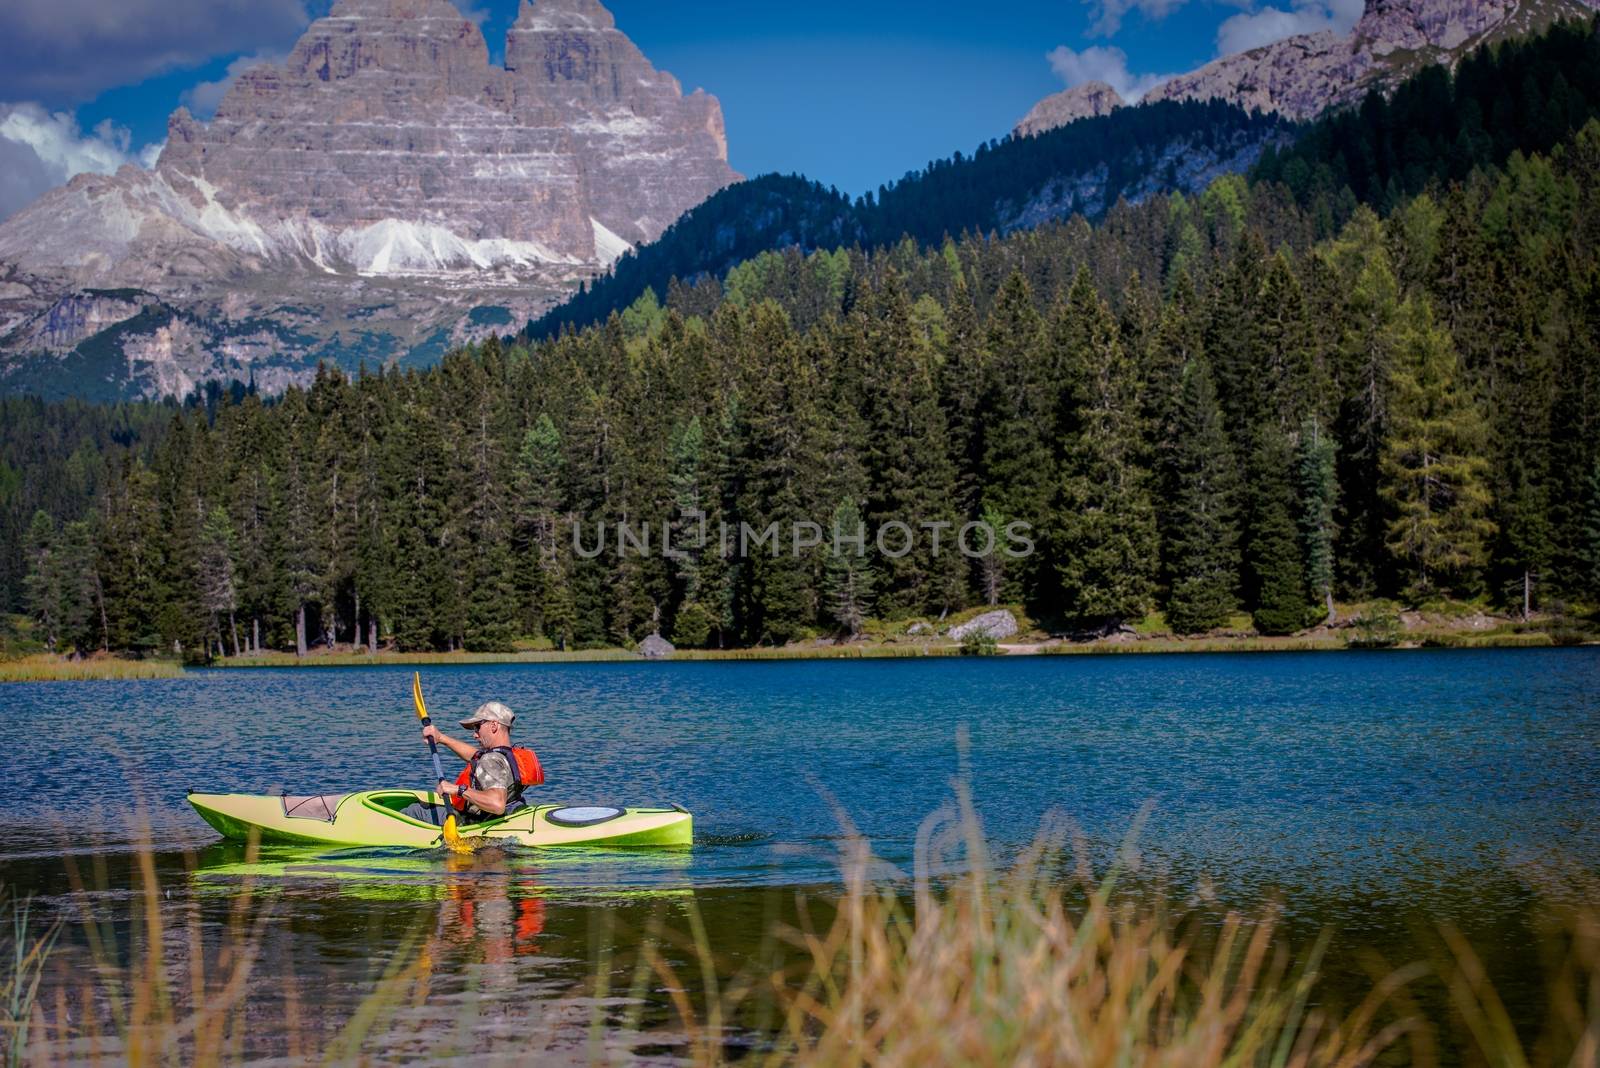 Scenic Lake Kayak Tour by welcomia